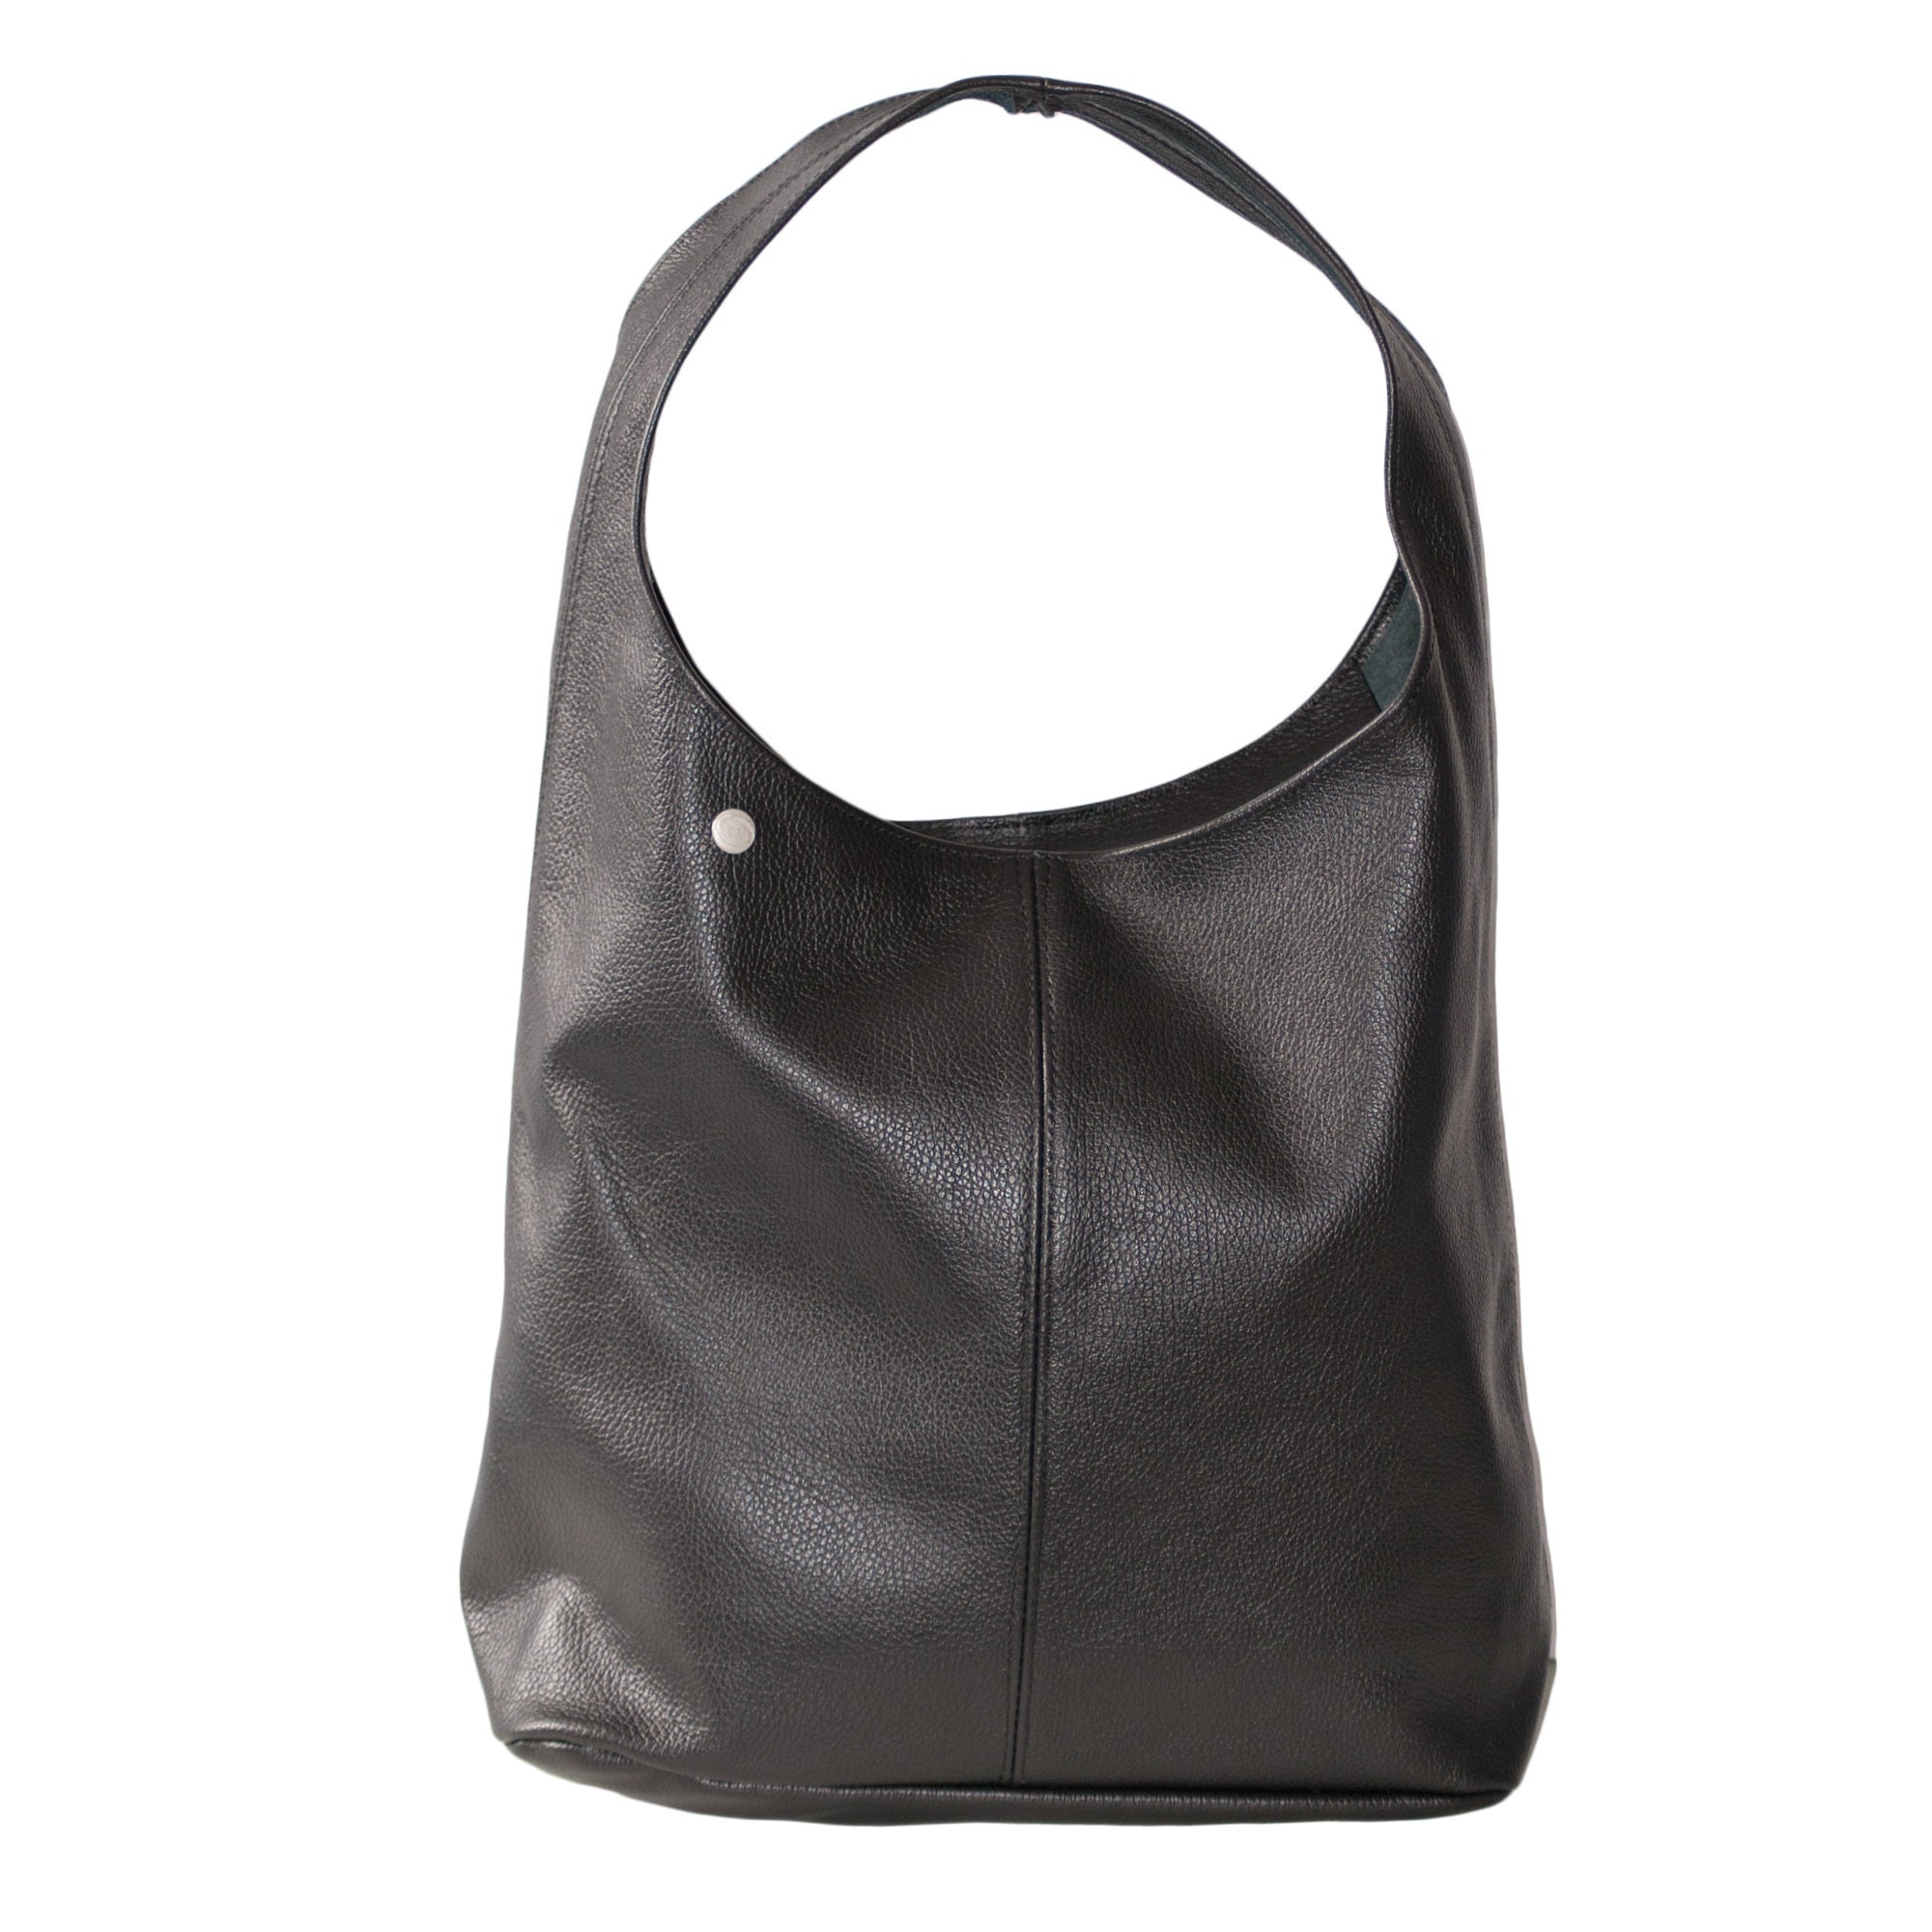 ZIPPER CLOSURE on TOP Leather Bag Handbag Shopper 100% | Etsy UK